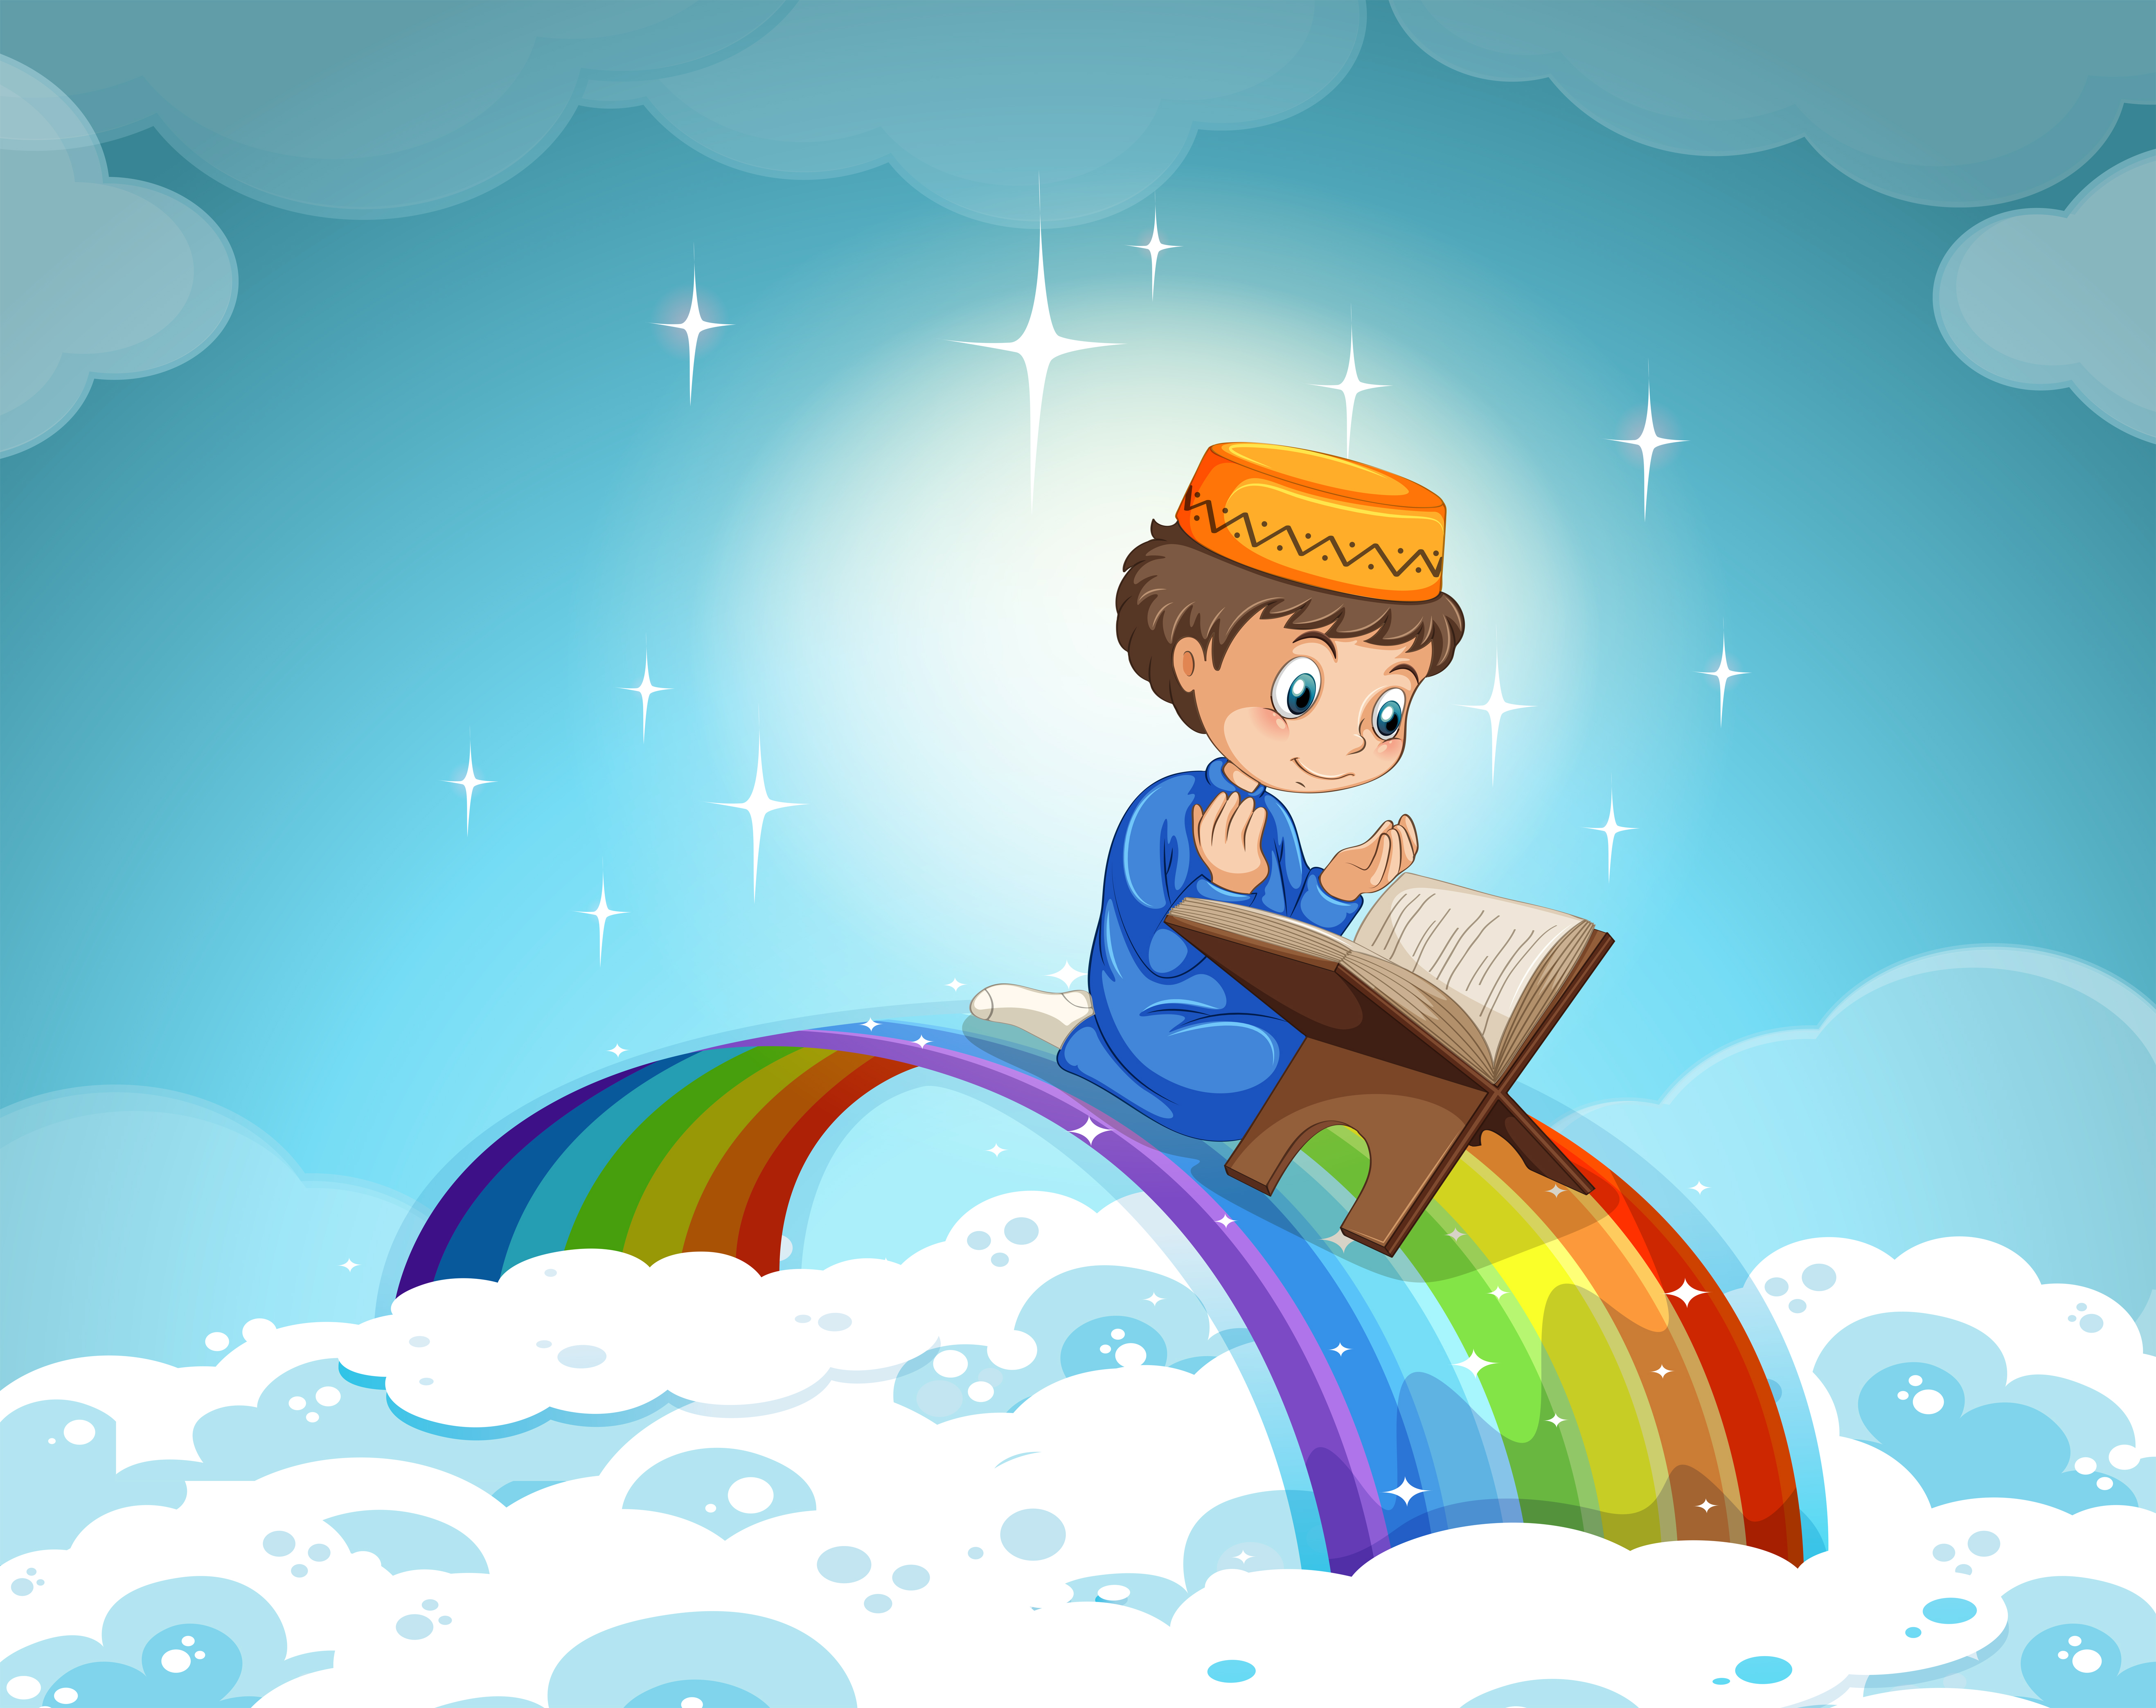 Download Muslim boy praying over the rainbow 419593 - Download Free Vectors, Clipart Graphics & Vector Art